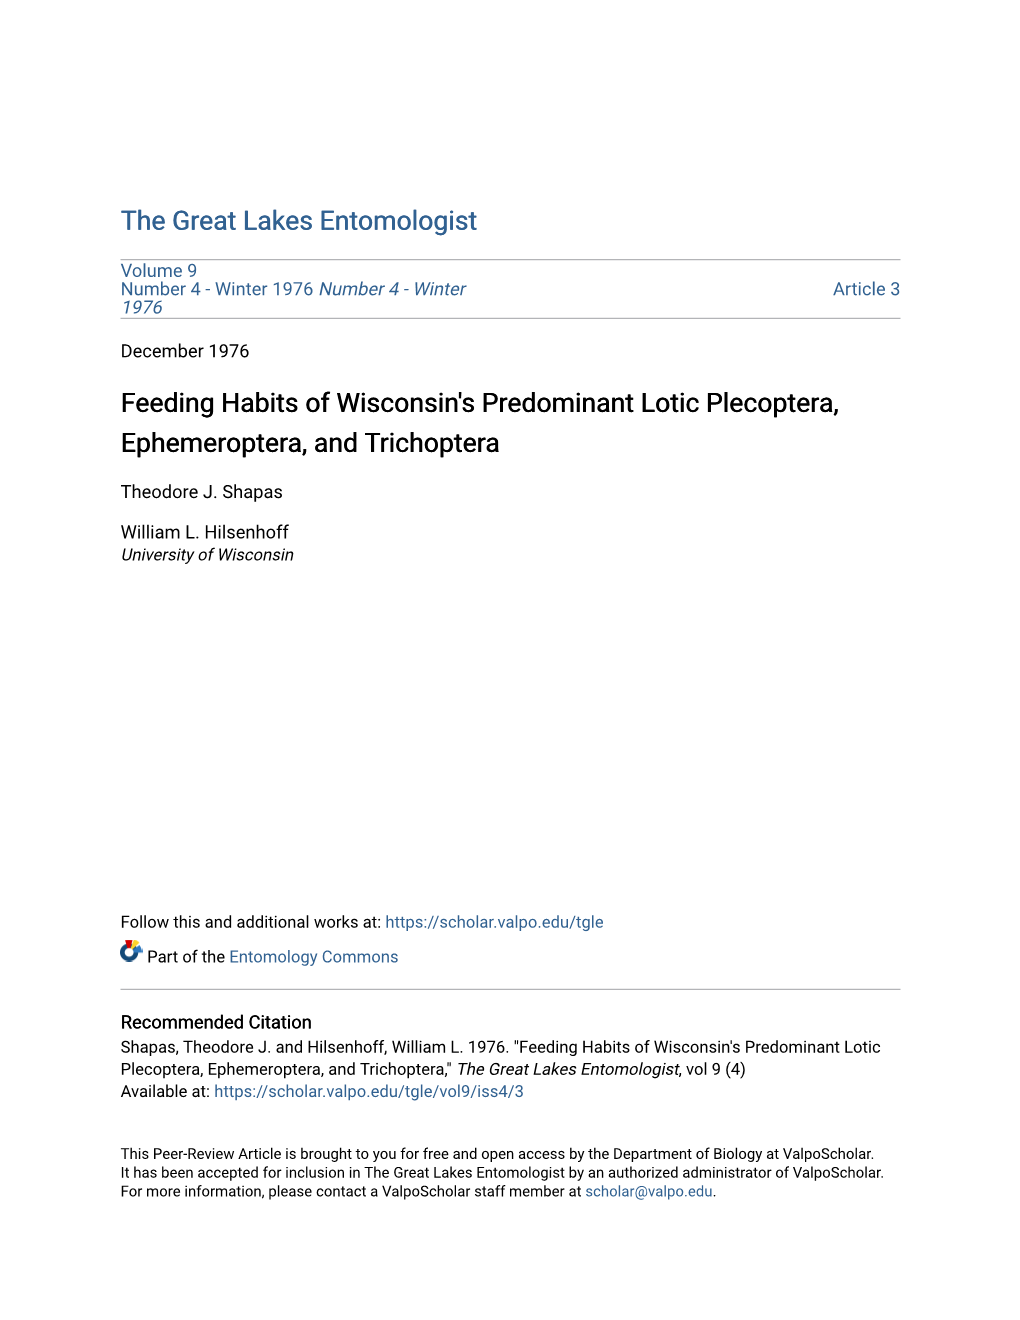 Feeding Habits of Wisconsin's Predominant Lotic Plecoptera, Ephemeroptera, and Trichoptera